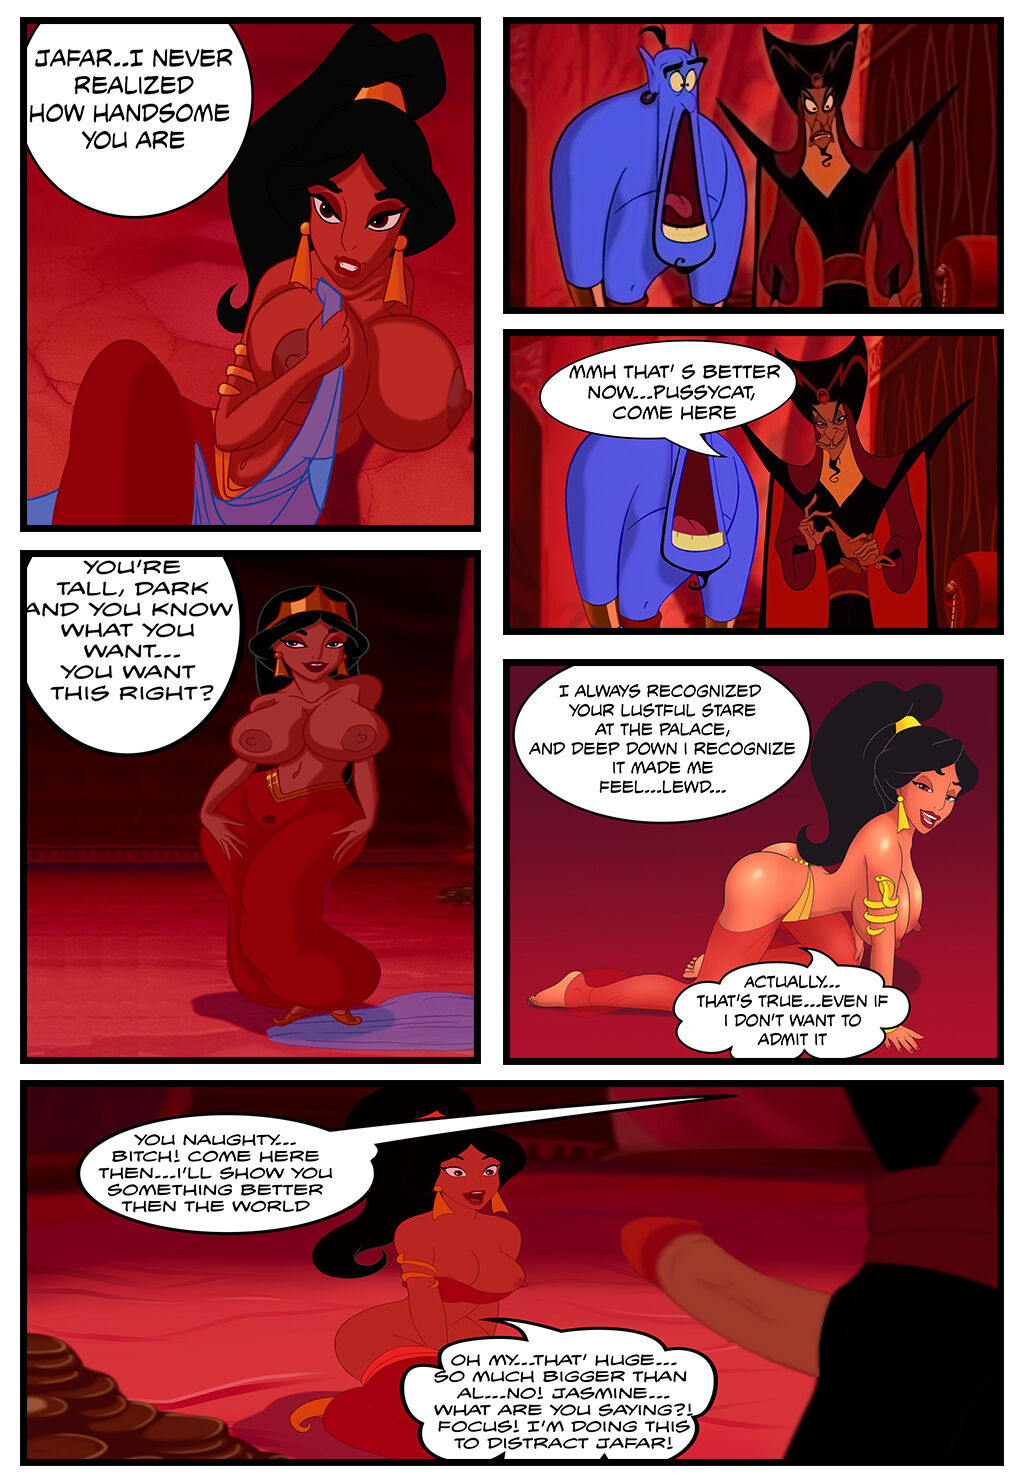 Jasmine Cartoon Anal - Jasmine wants Jafar (Aladdin) - Porn Cartoon Comics